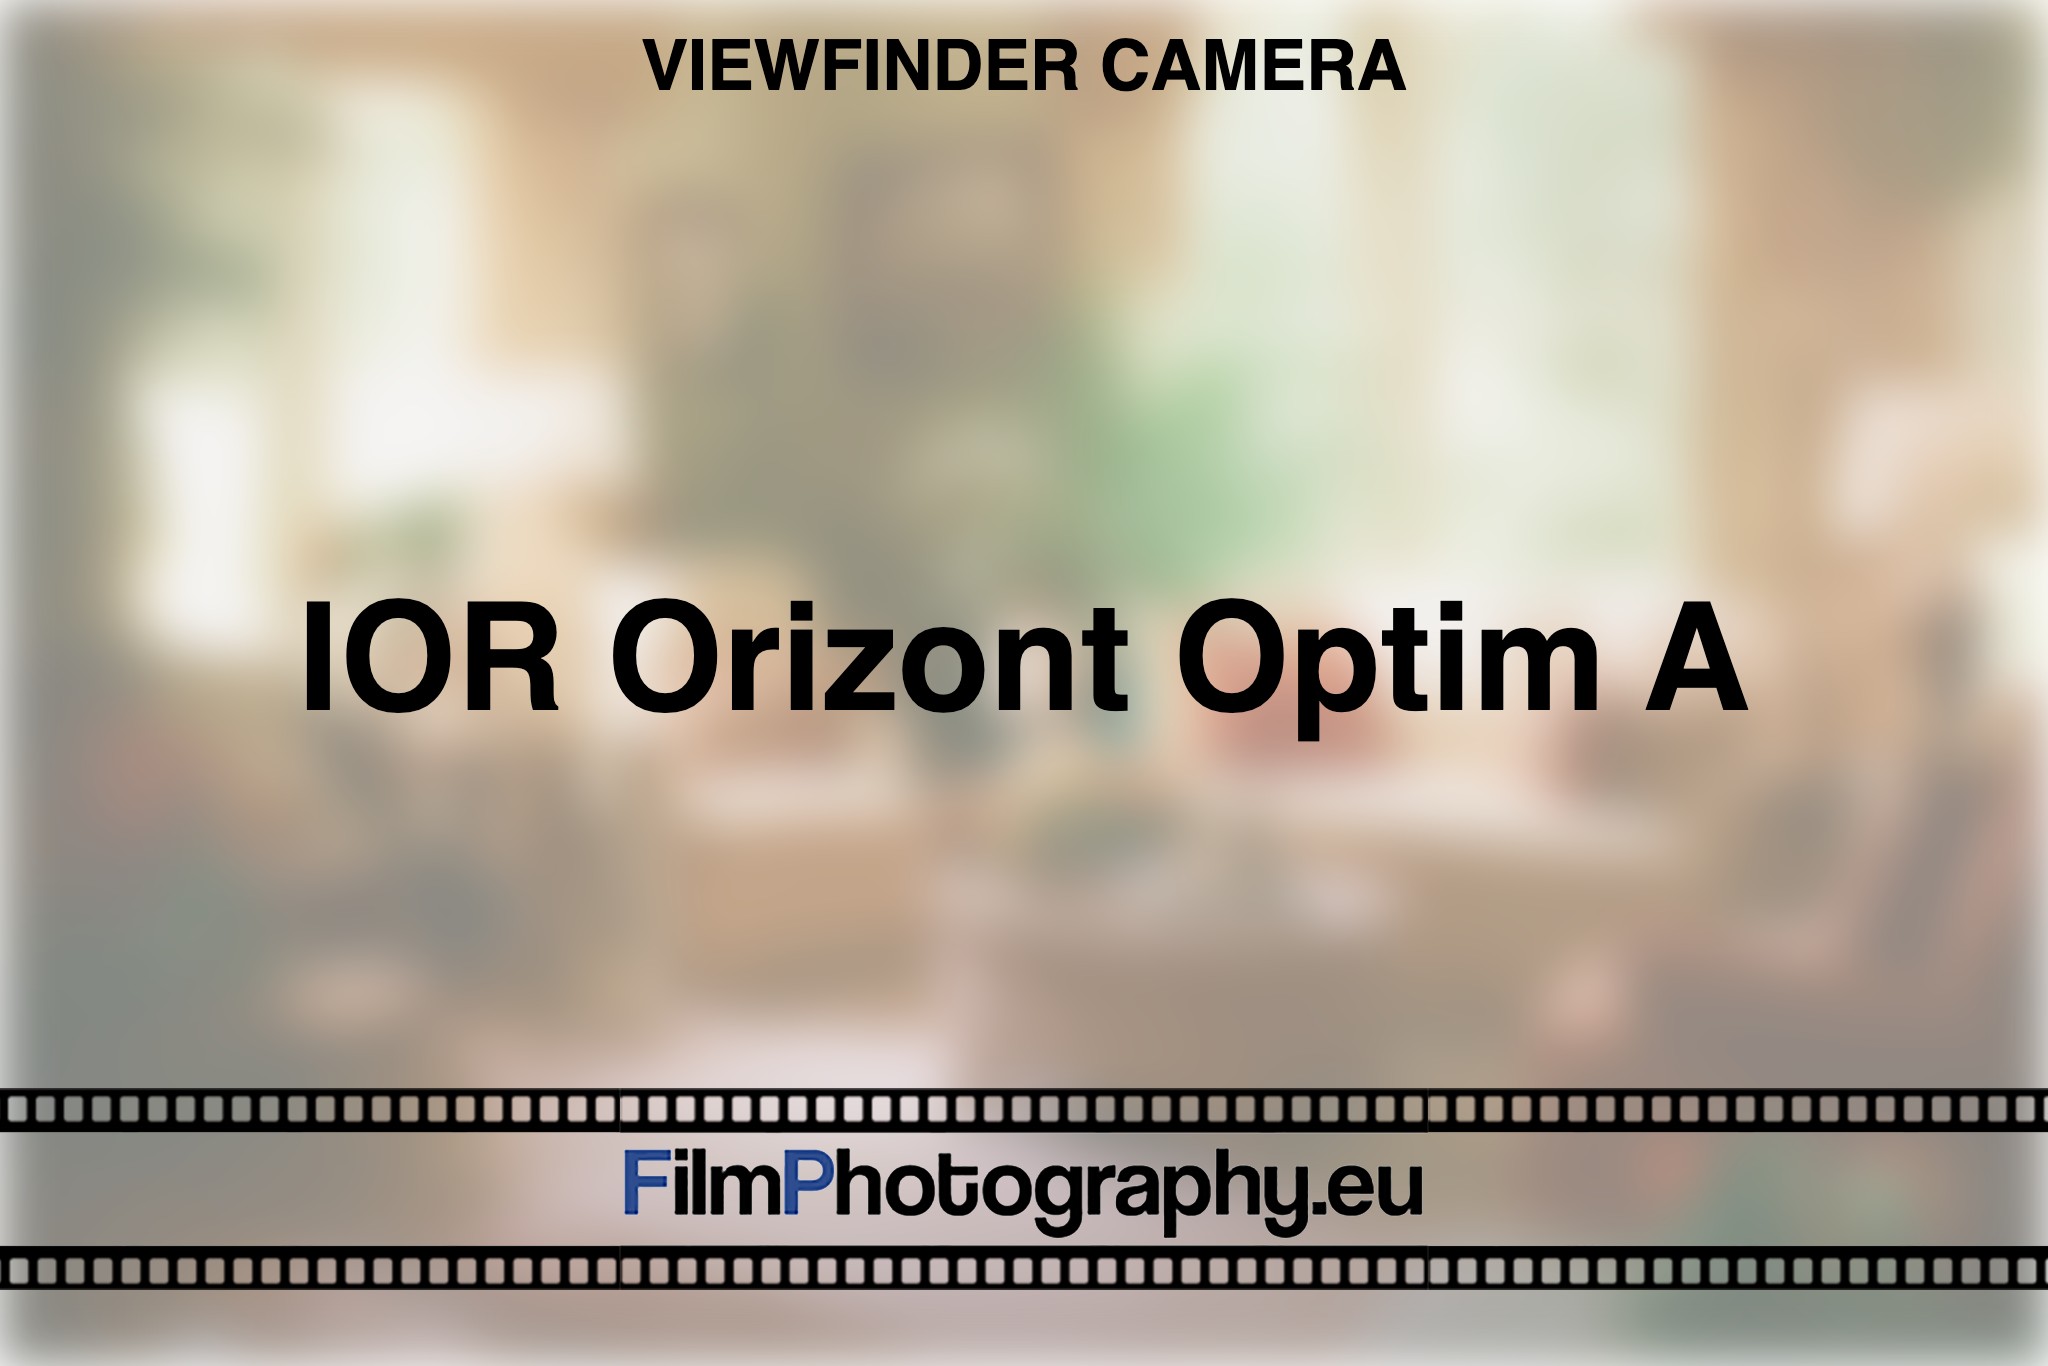 ior-orizont-optim-a-viewfinder-camera-bnv